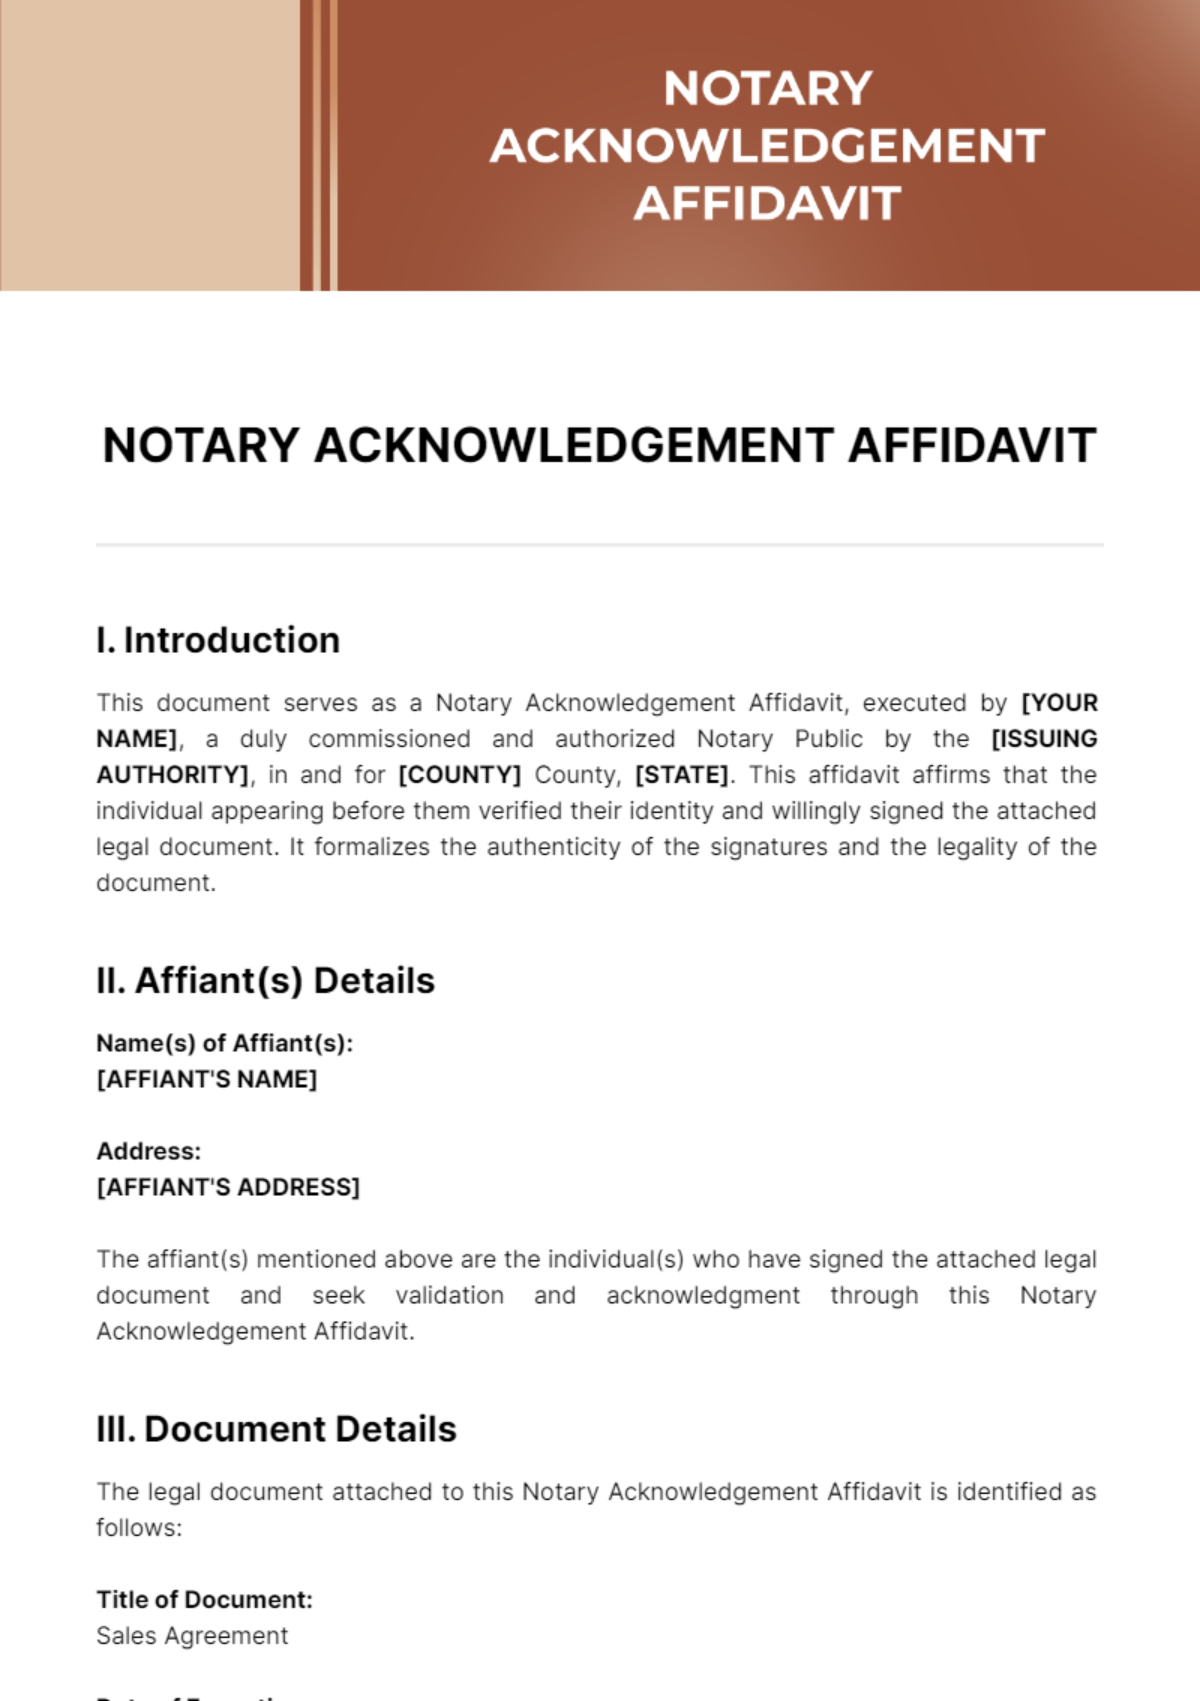 Notary Acknowledgement Affidavit Template